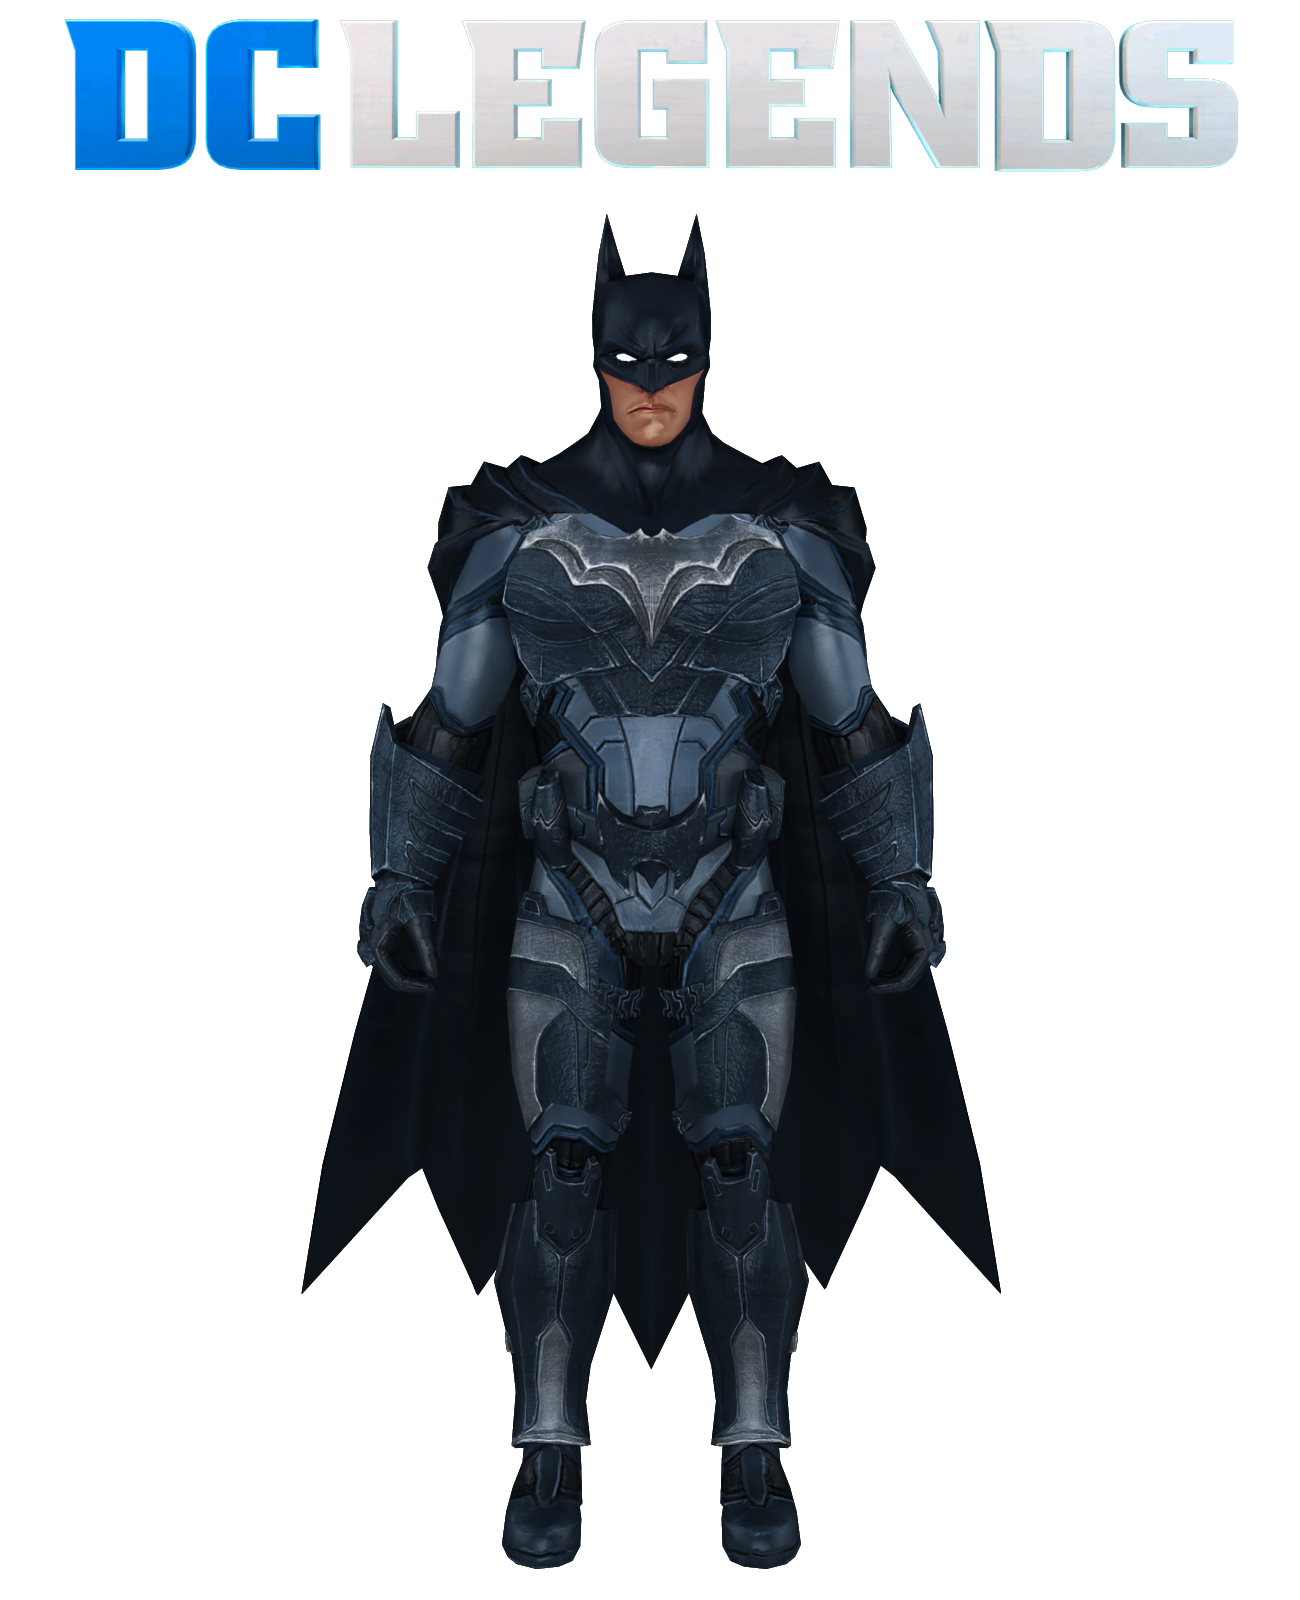 Batman Caped Crusader (Legendary) by Maxdemon6 on DeviantArt